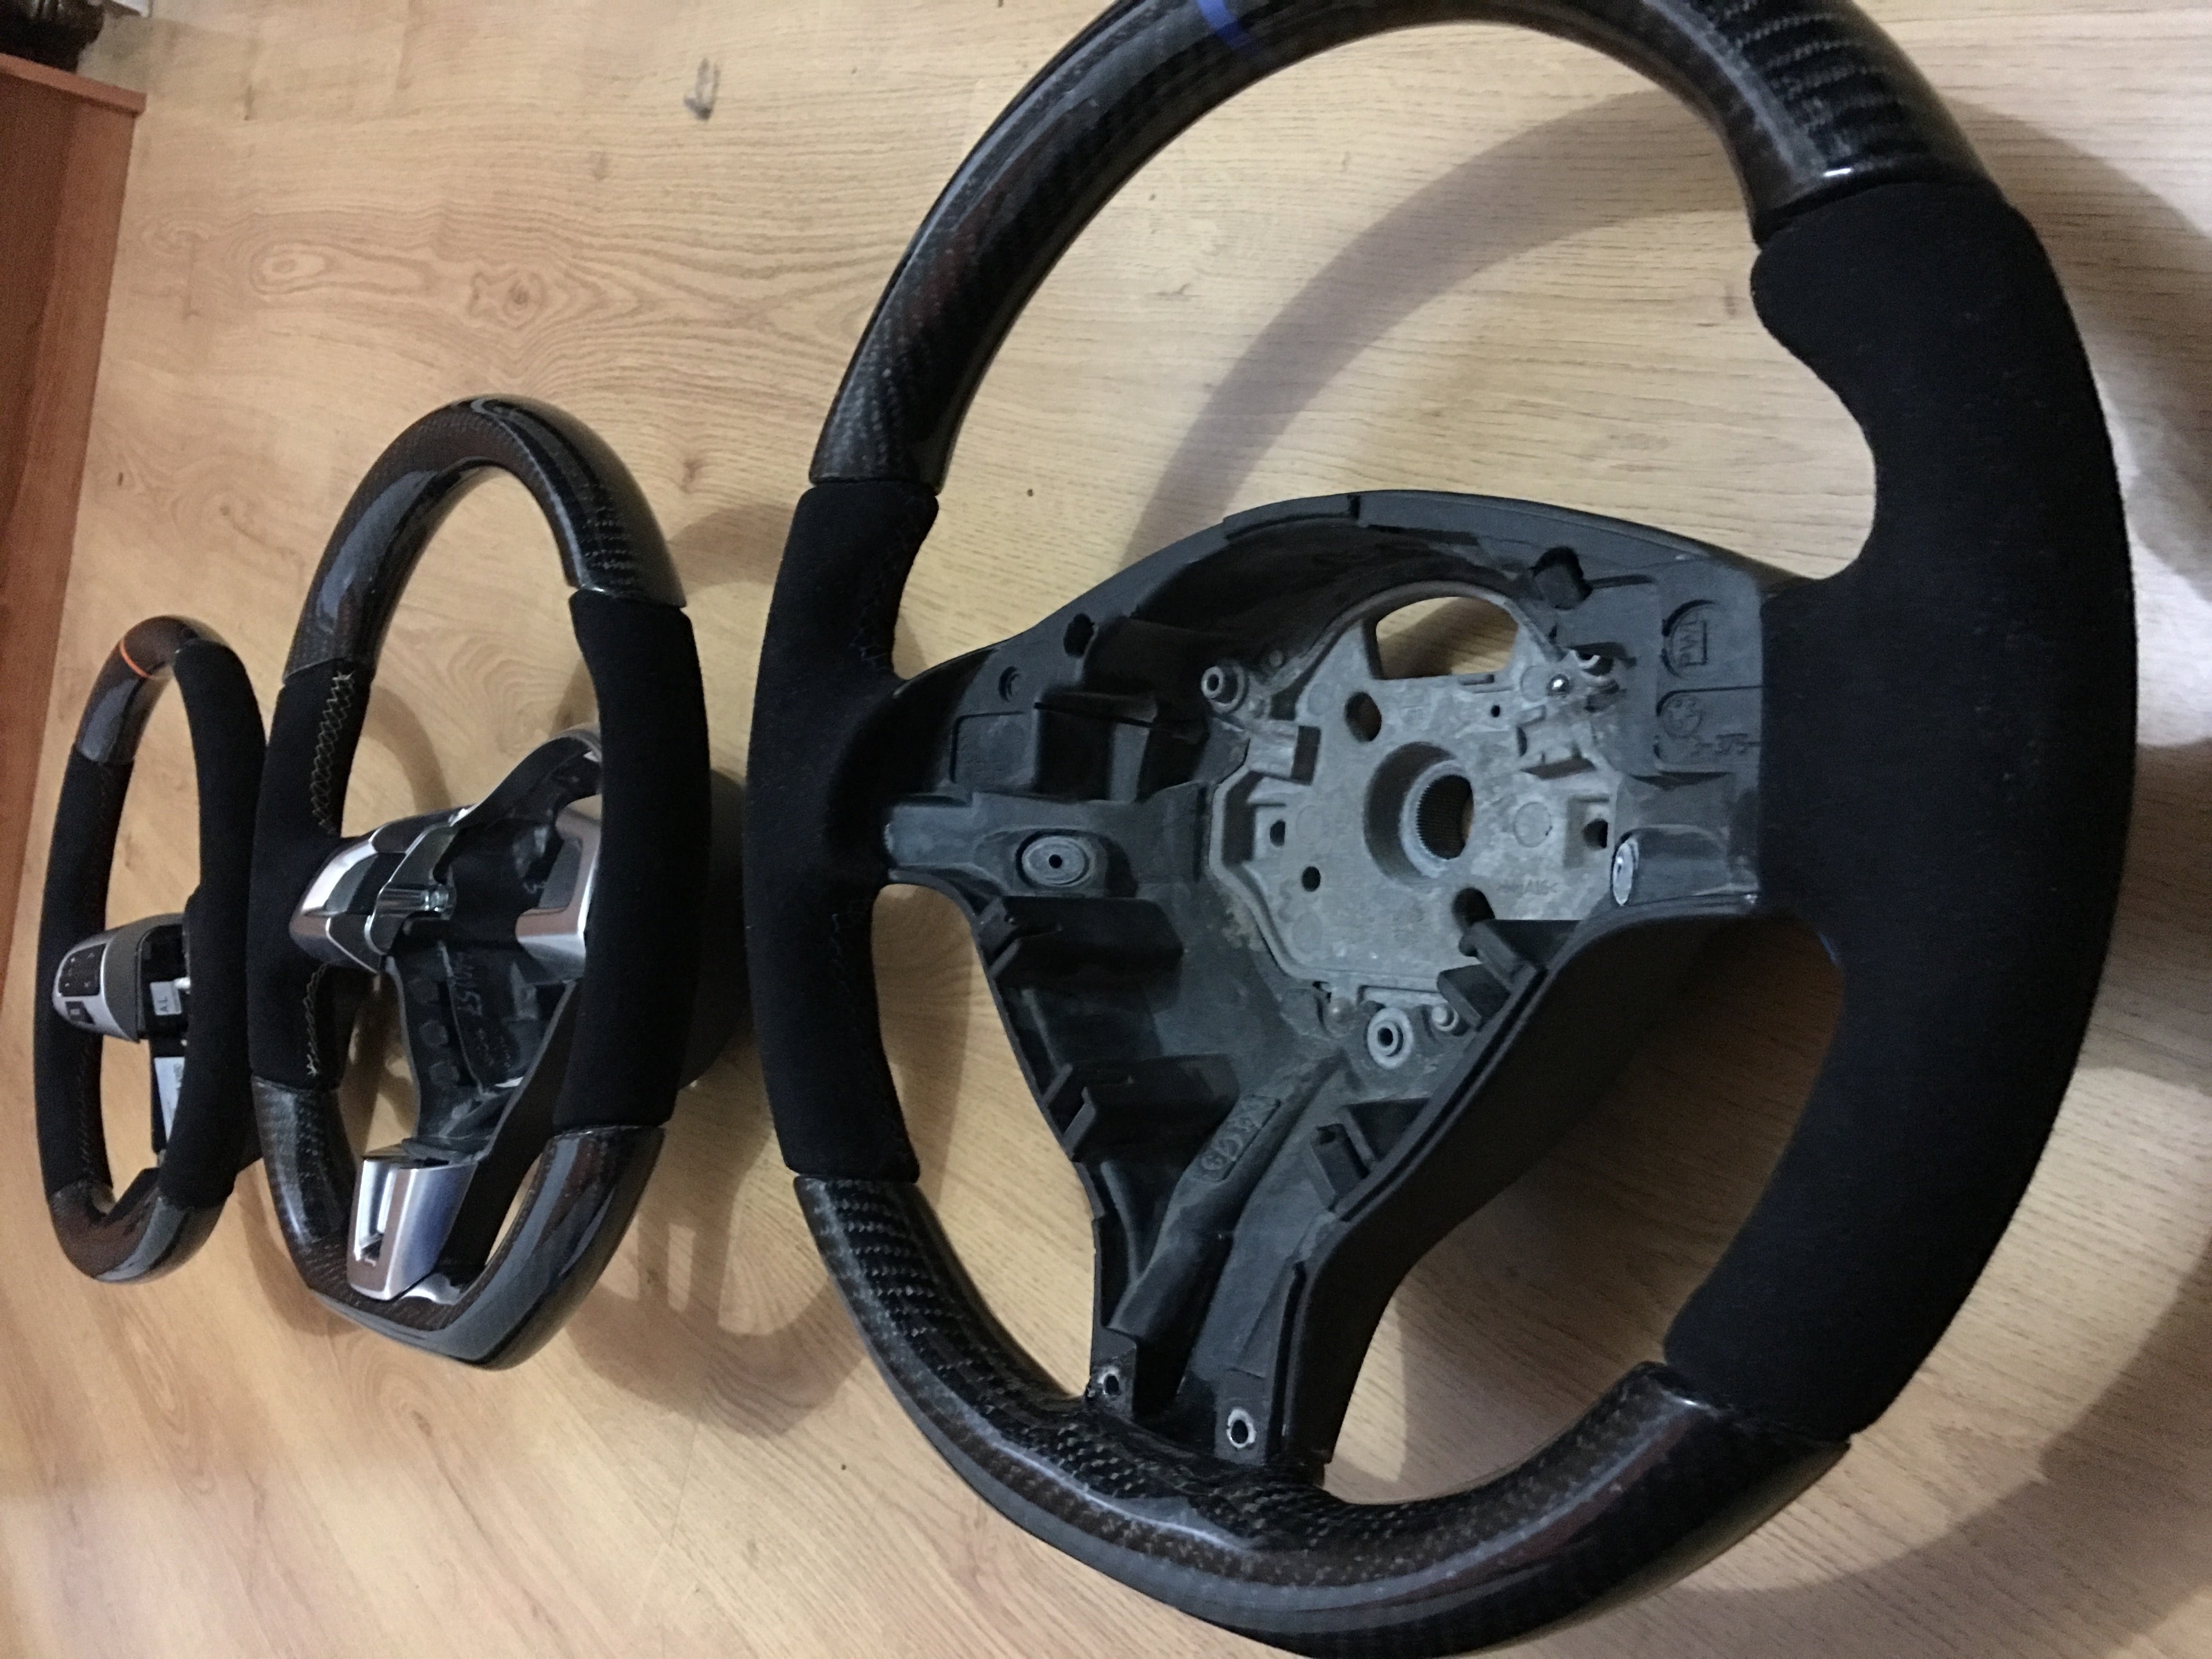 Carbon Fiber Steering Wheel (Transformation of your own steering wheel)